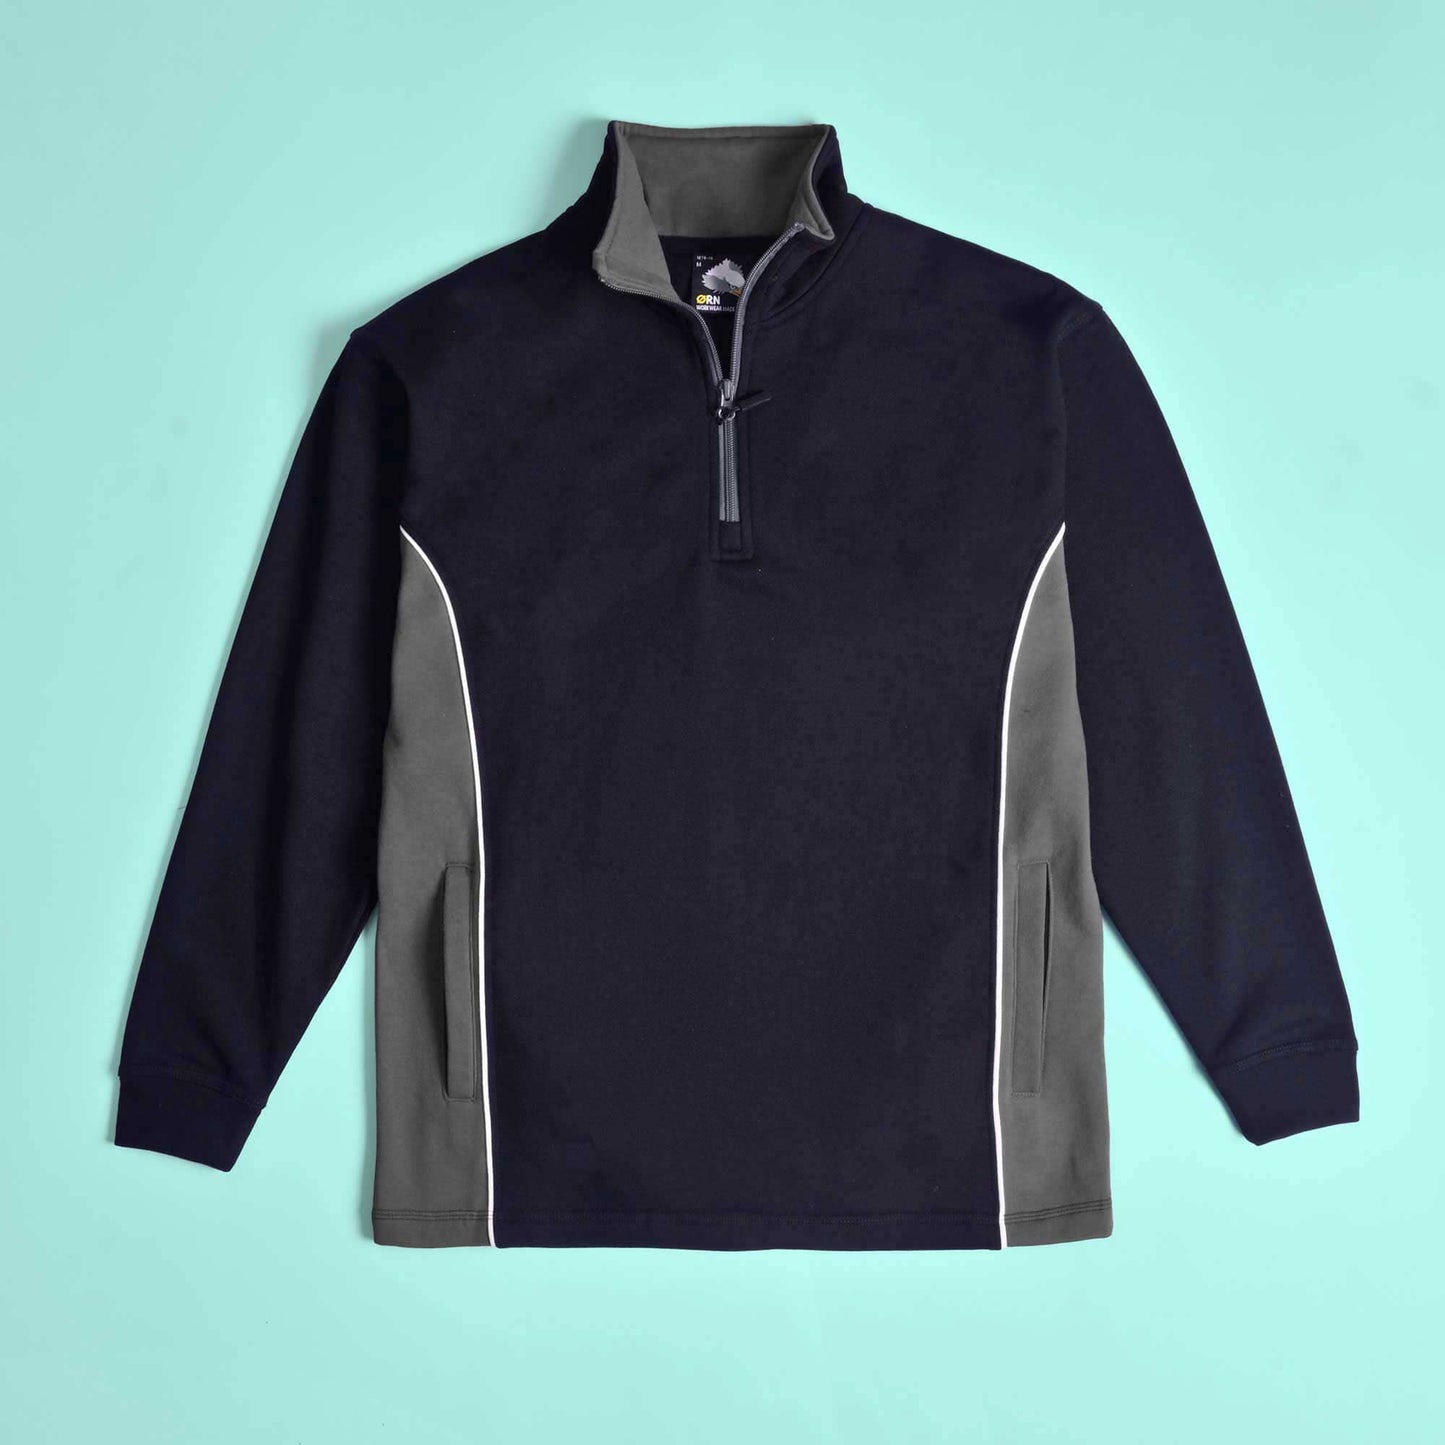 Men's Contrast Panels Quarter Zipper Fleece Sweat Shirt Minor Fault Image Navy Graphite XS